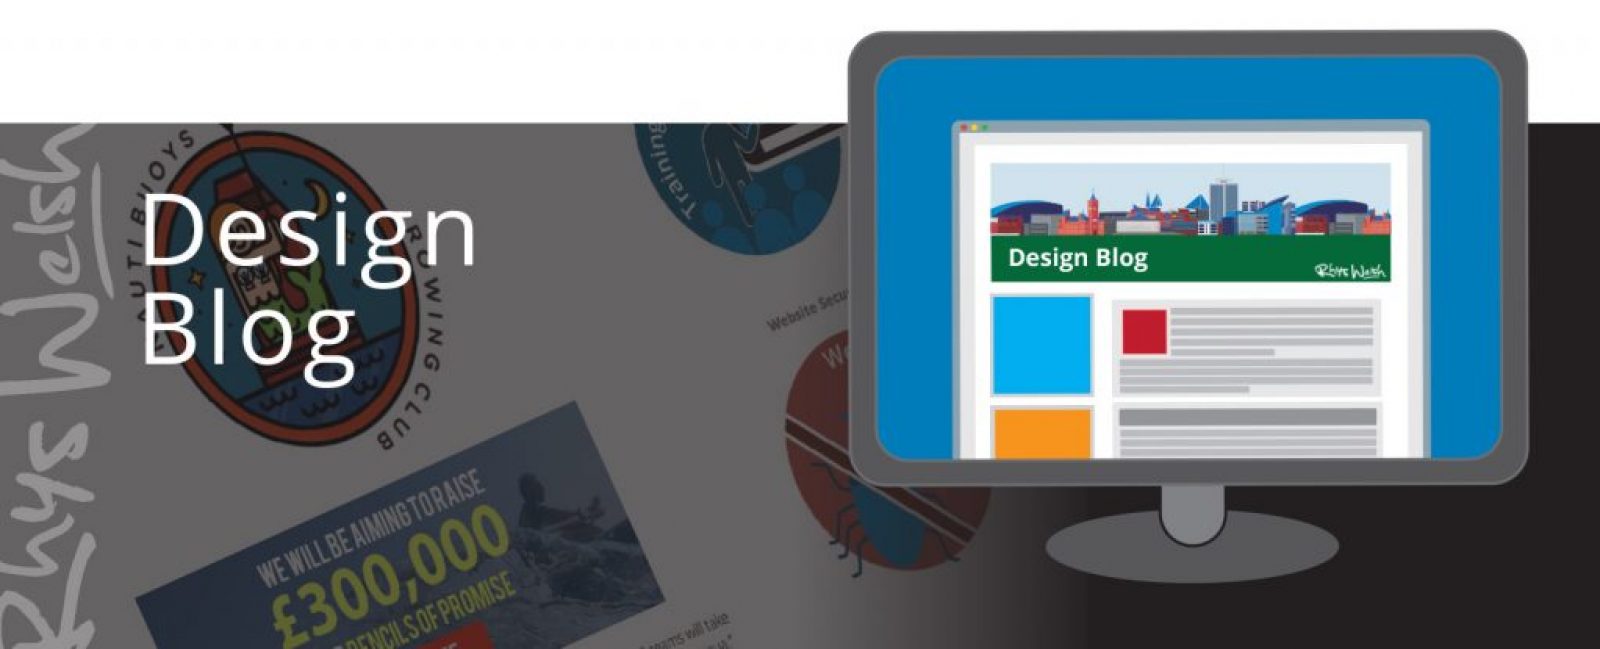 Design-Blog-Web-Design-for-cardiff